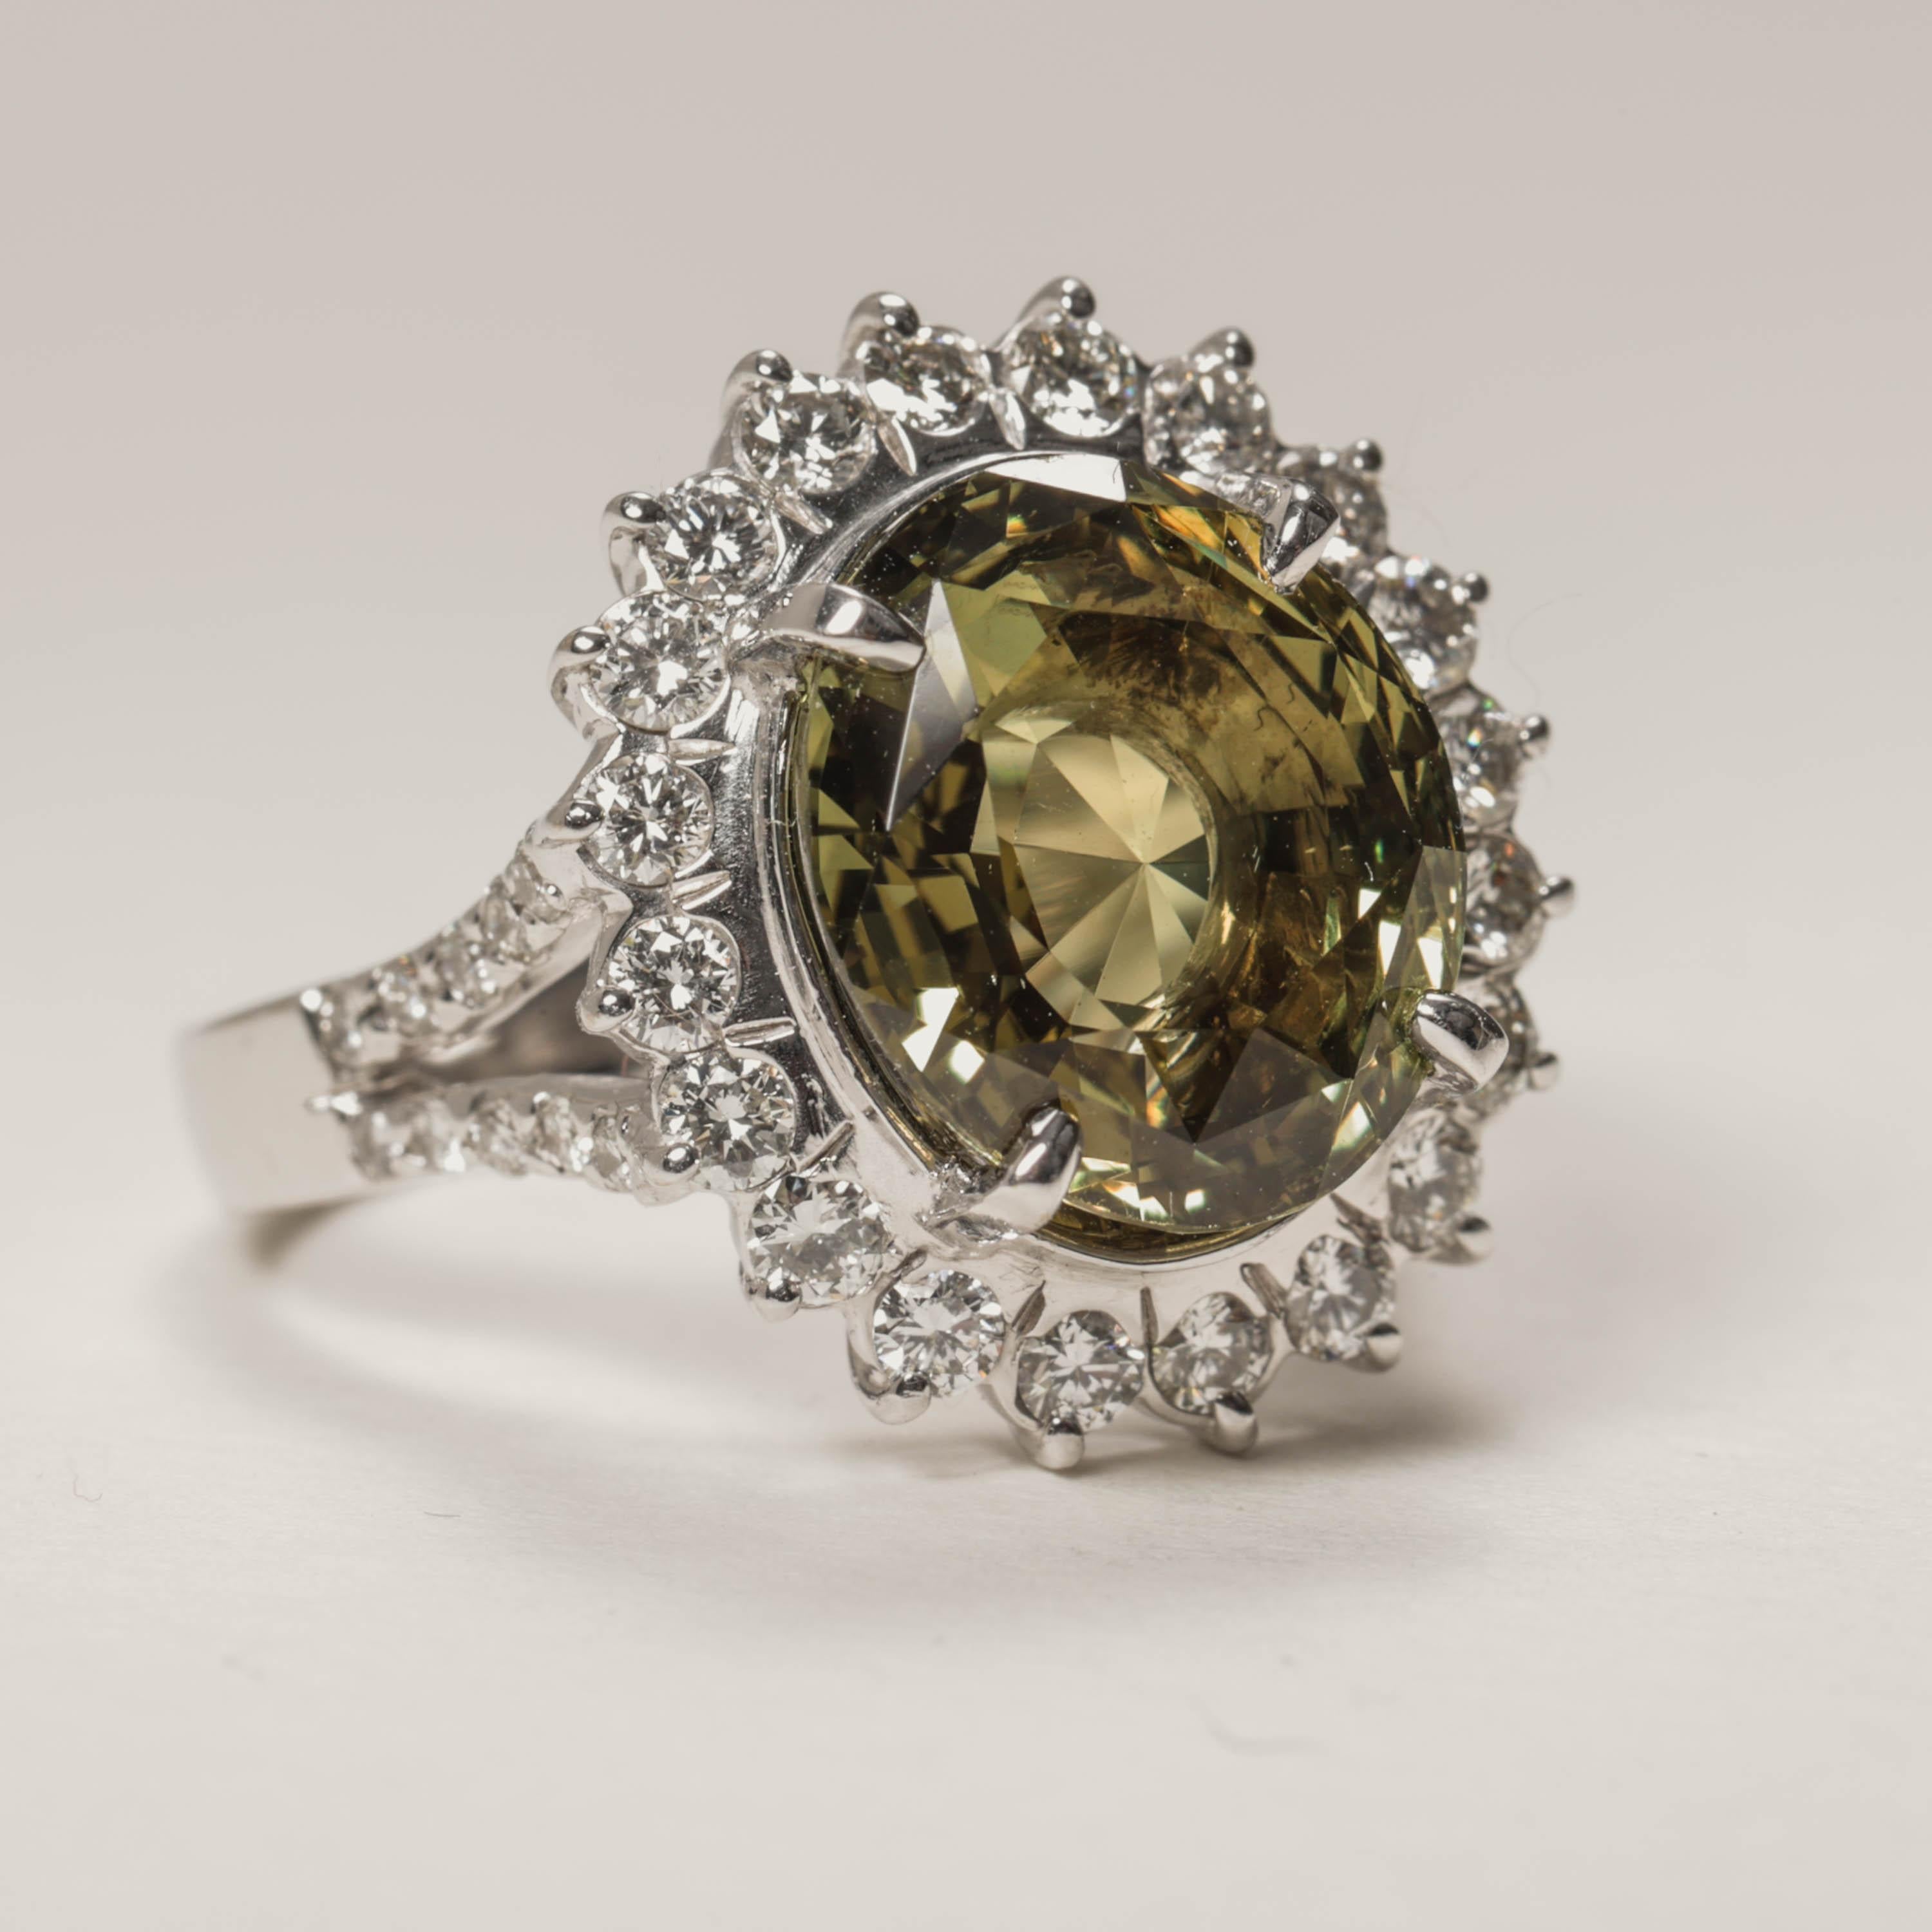 Alexandrite & Diamond Ring 7.35 Carats, Rare Color Change Gem Certified 9